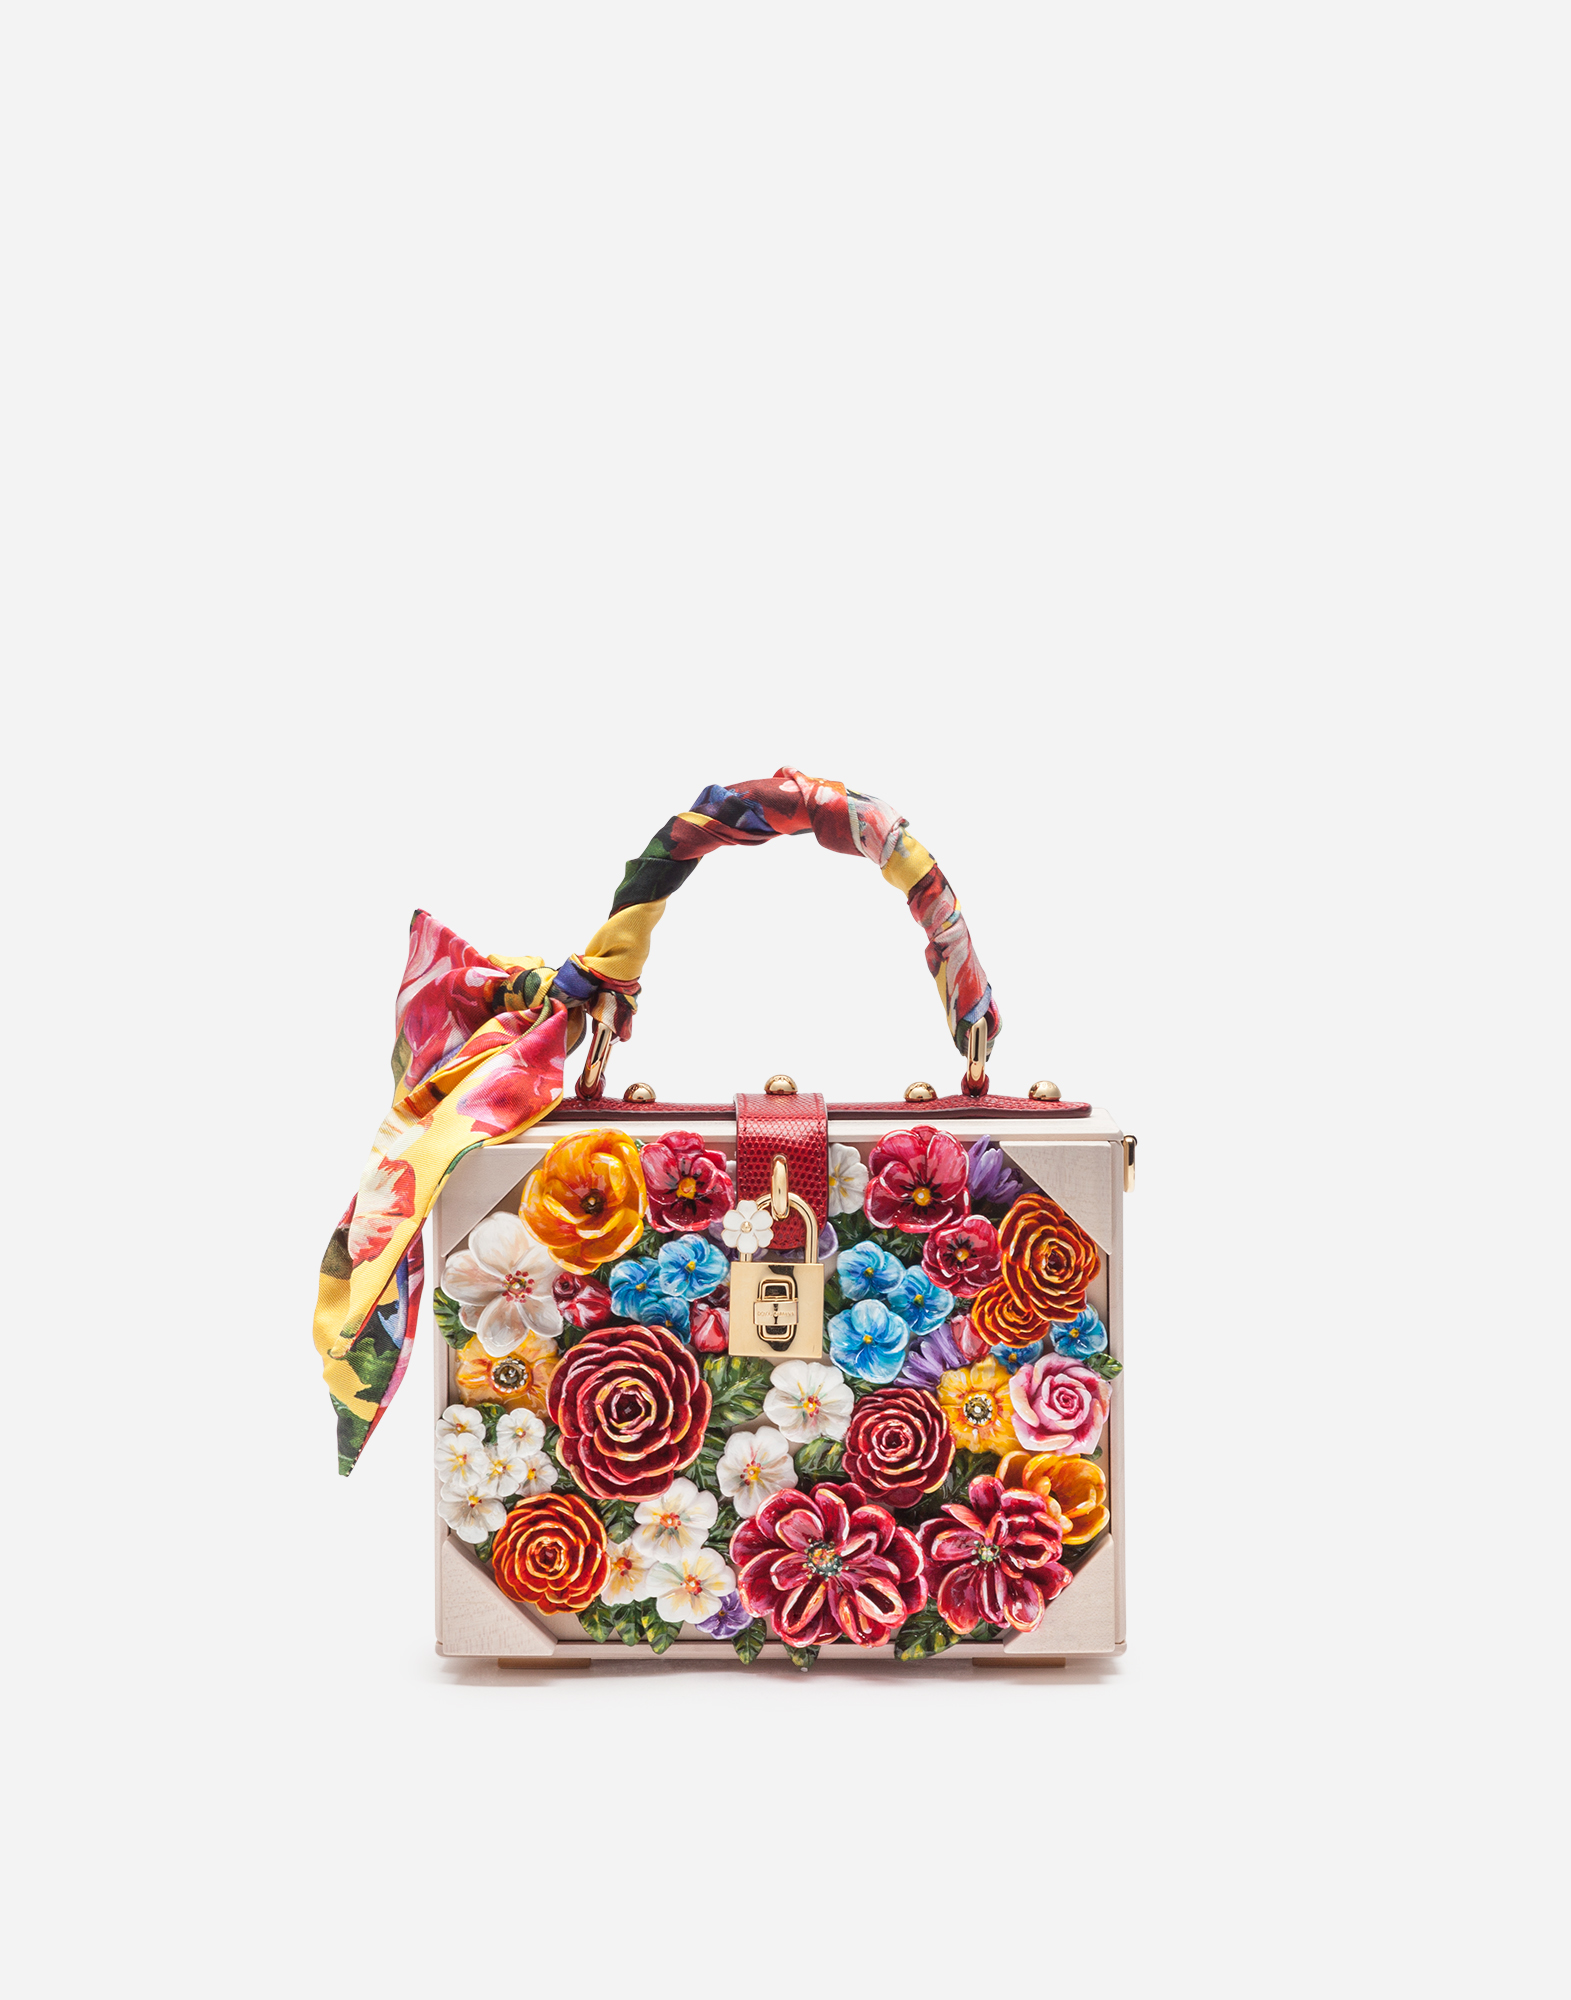 Handbags for Women Roses Leaf Embroidery Tote Shoulder Bag Satchel for Ladies Girls 